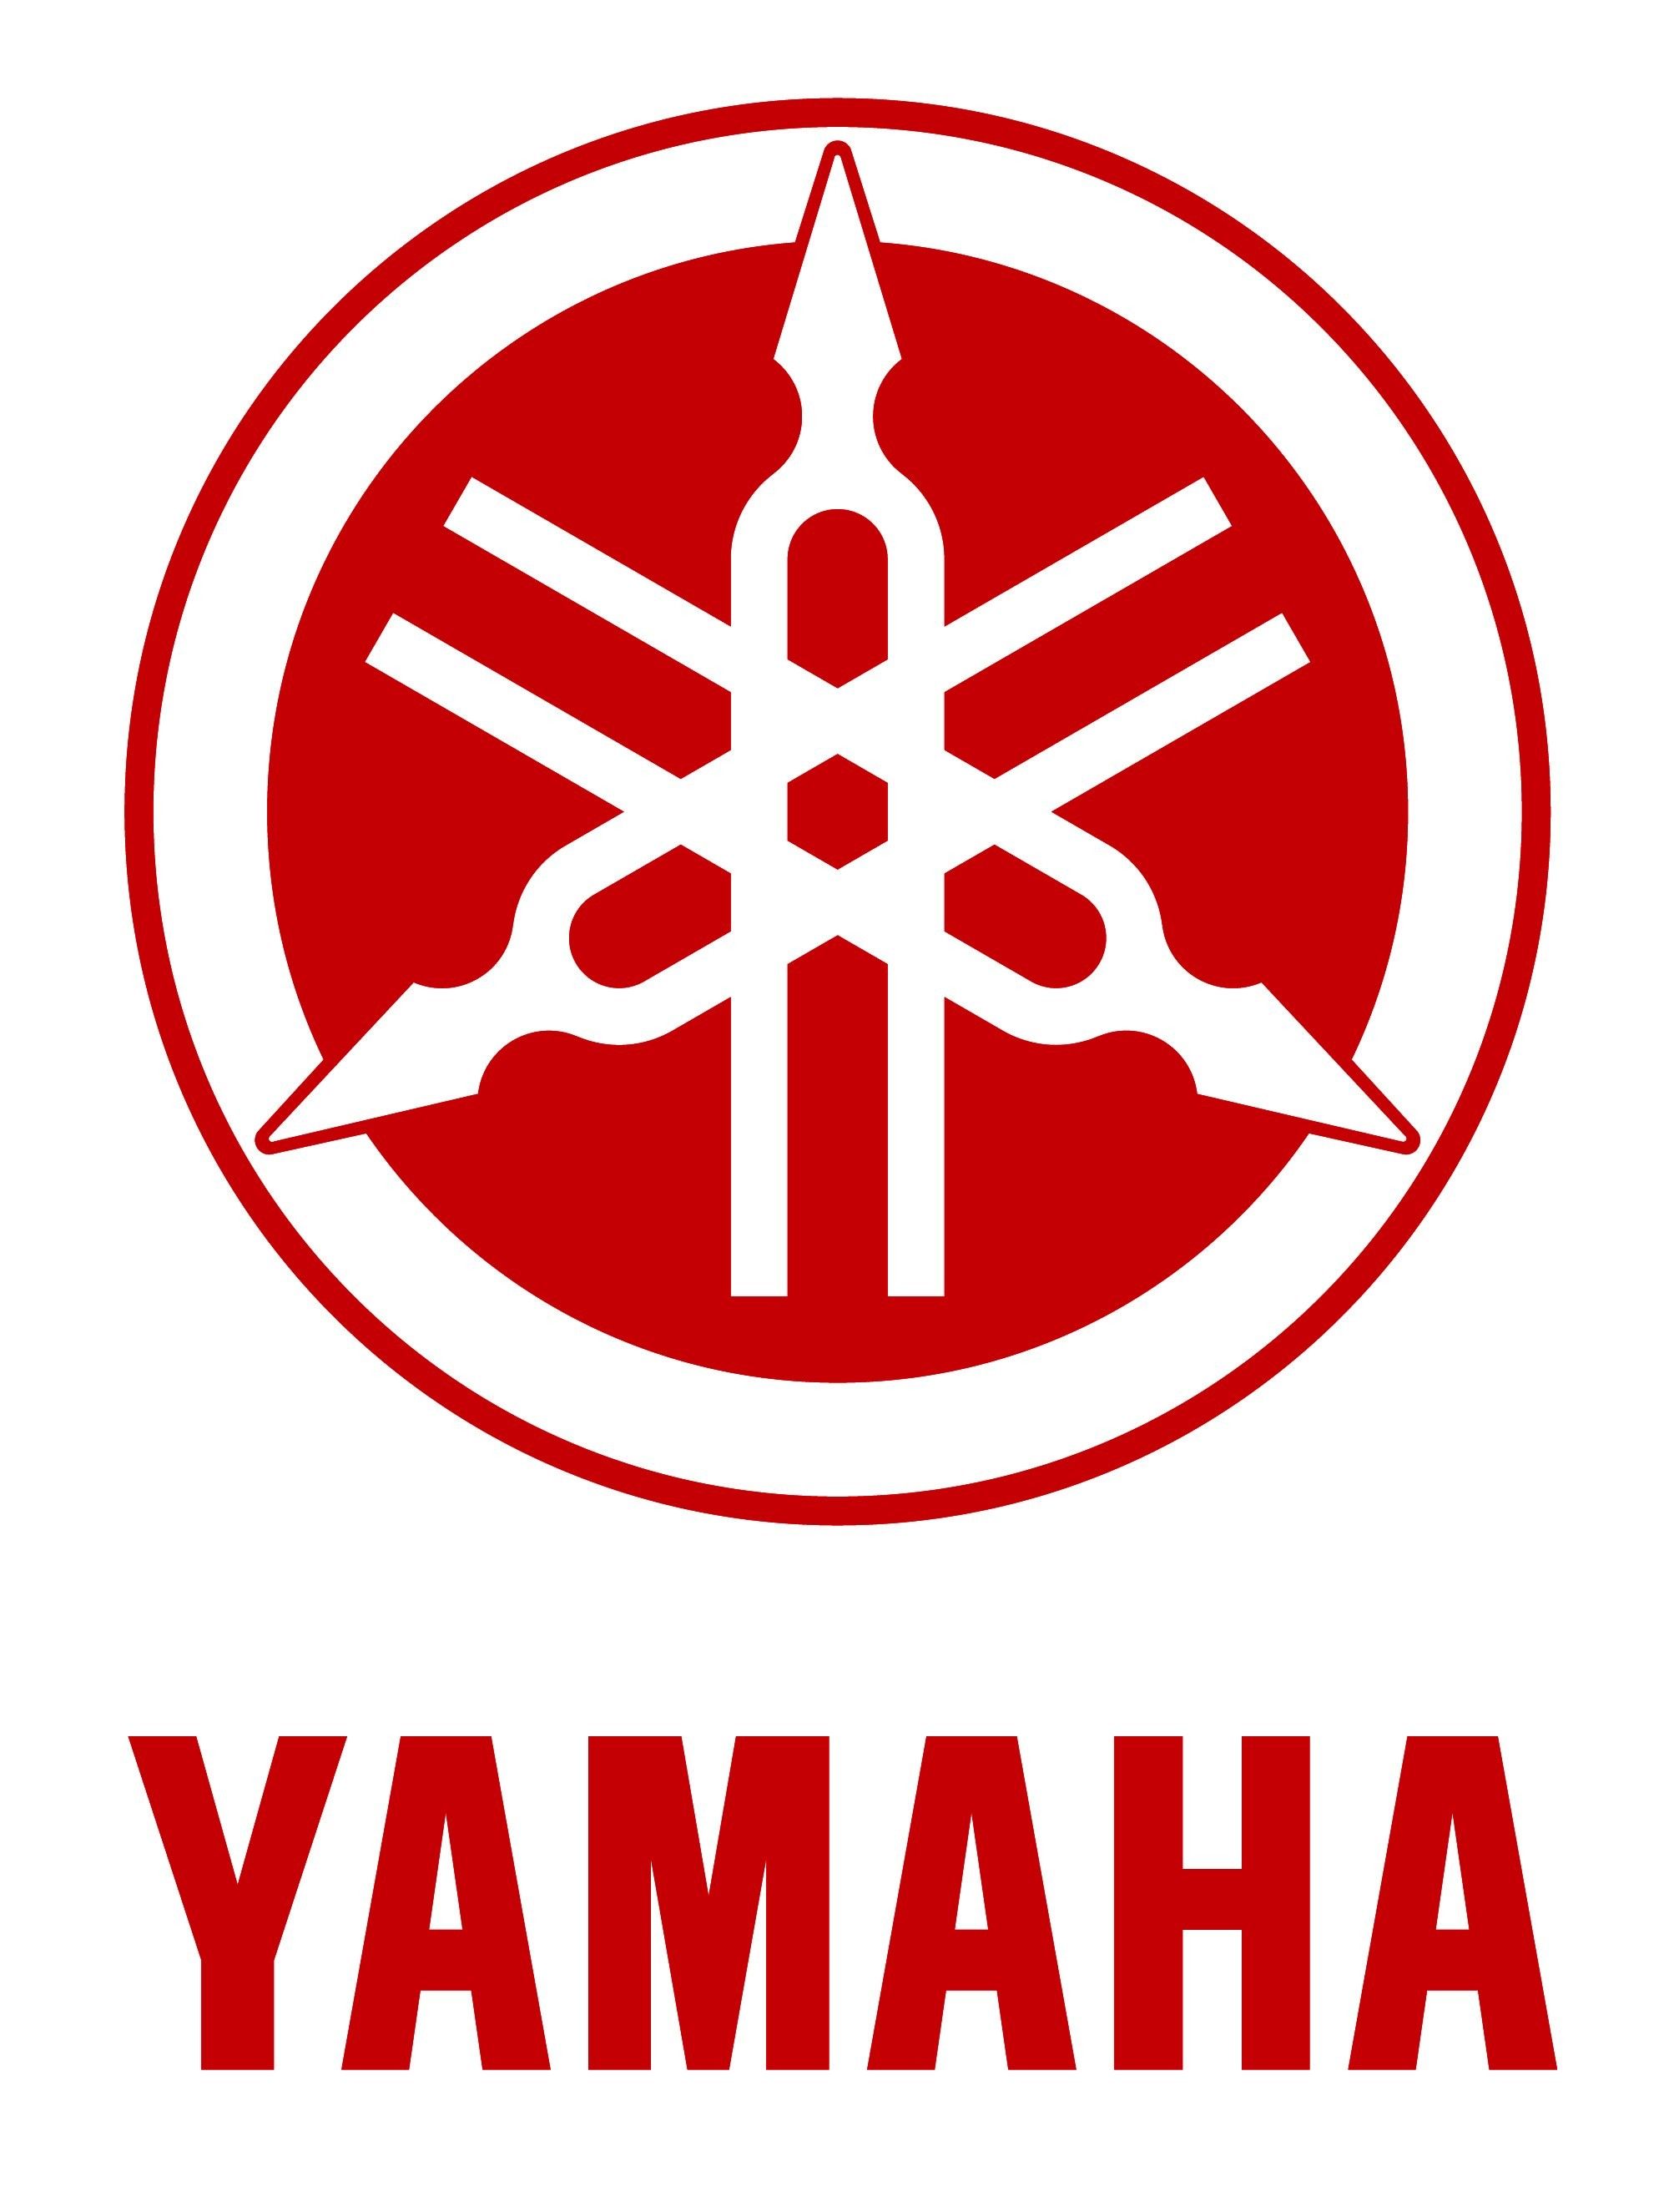 Yamaha tuning forks logo | Yamaha R1 Forum: YZF-R1 Forums